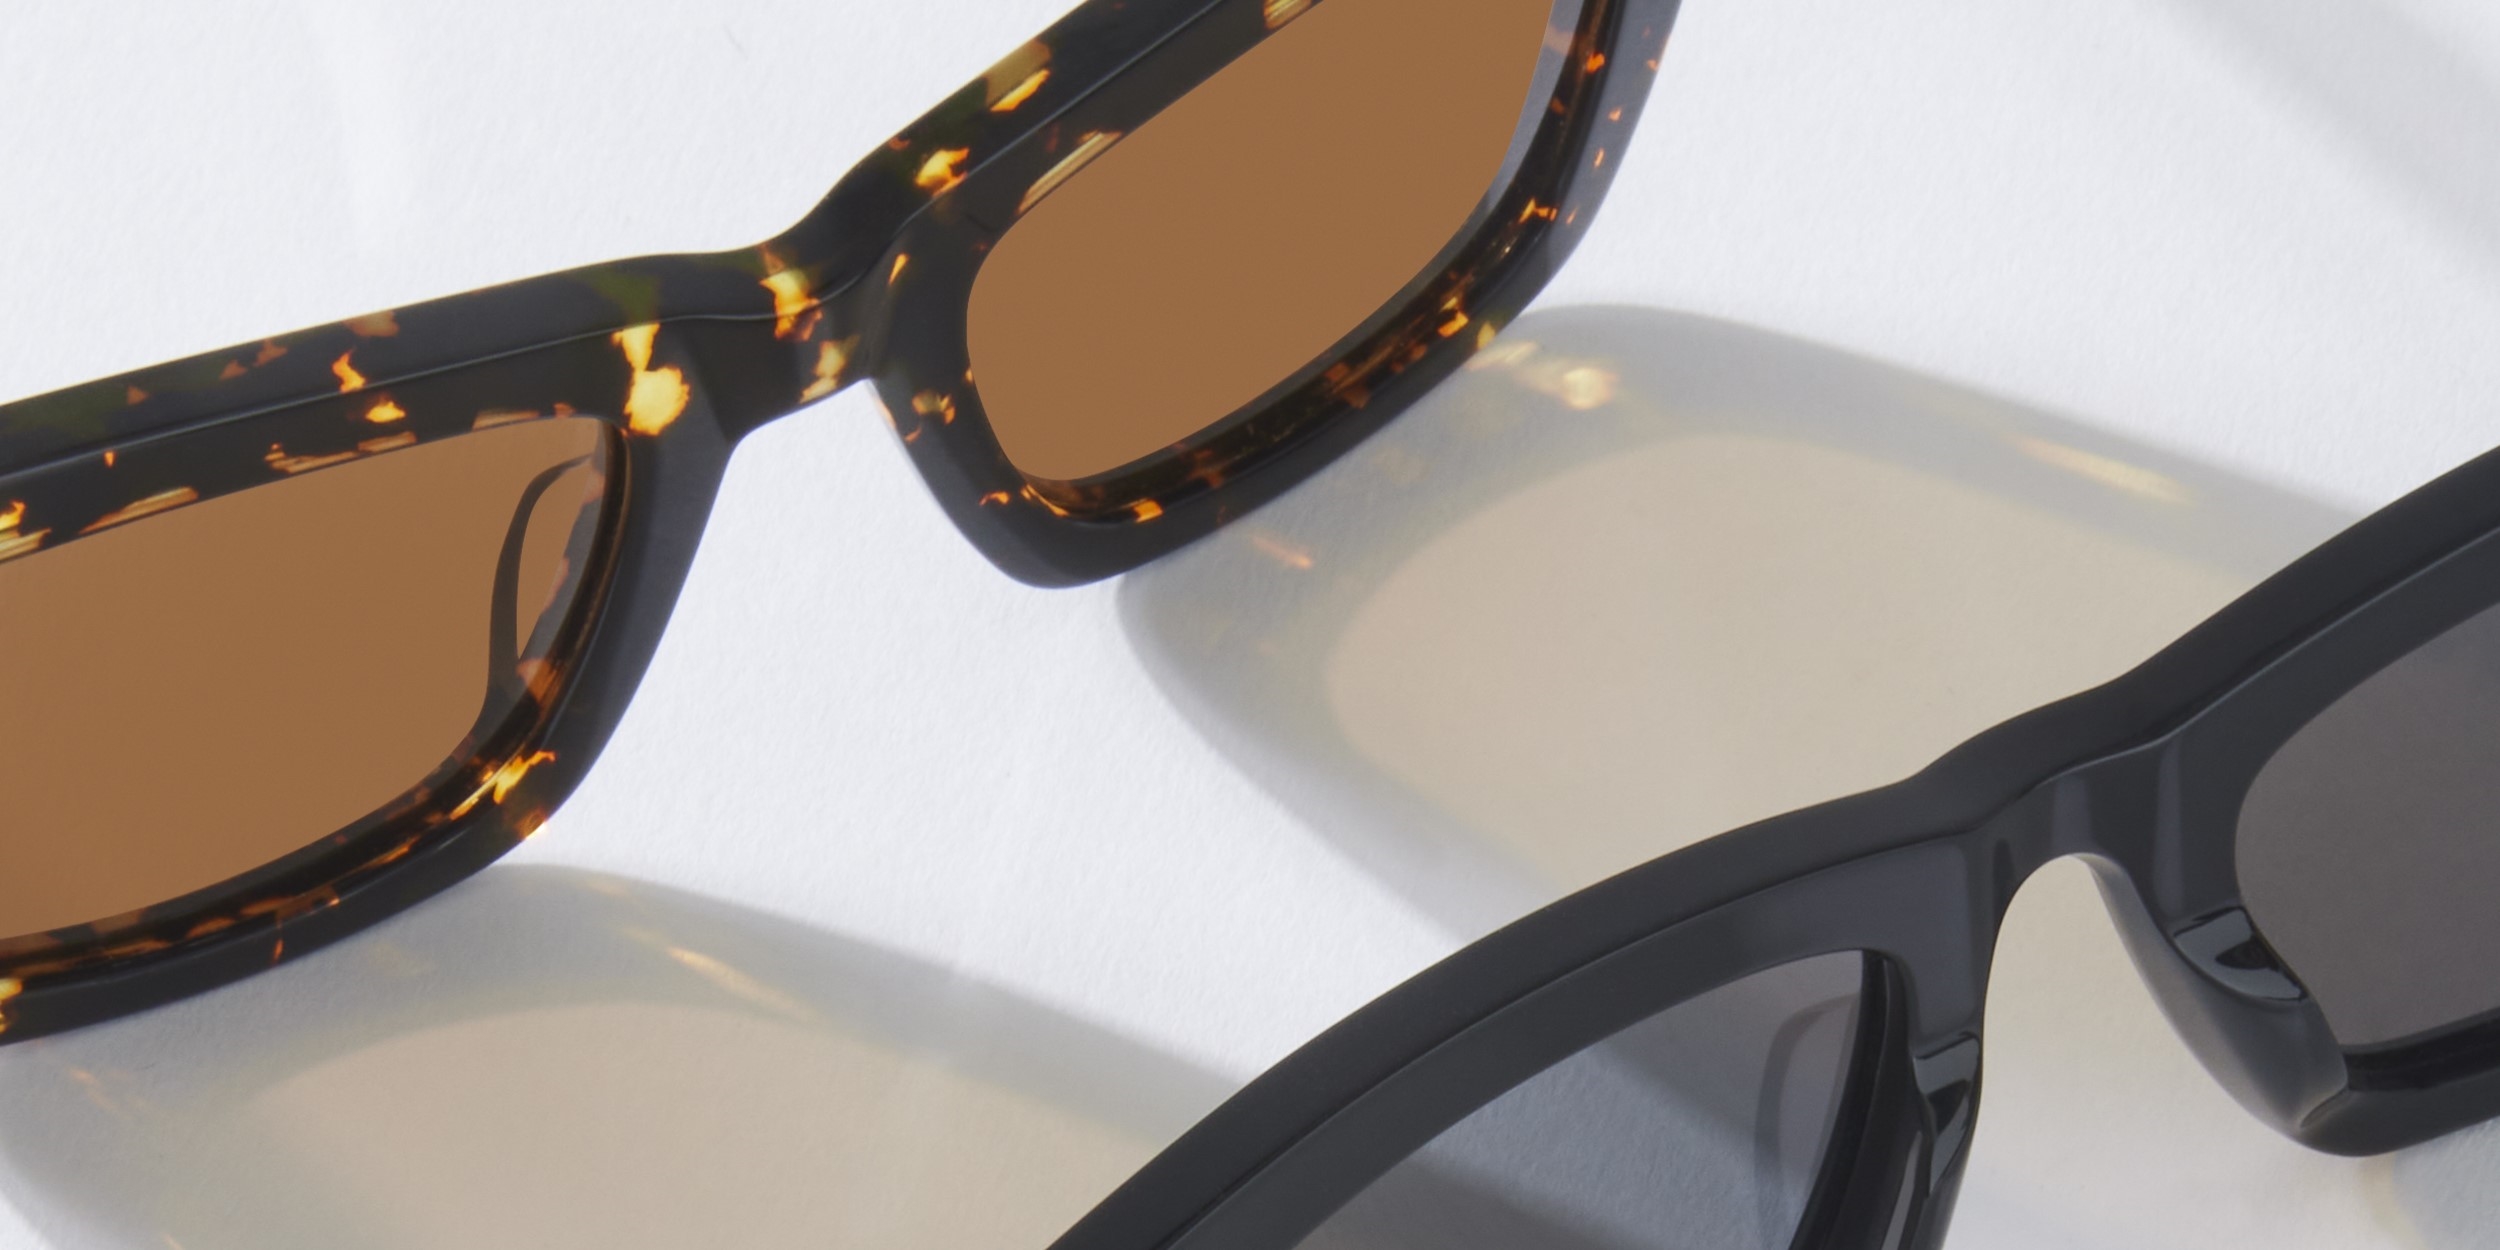 Photo Details of Manu Sun Cognac Sun Glasses in a room